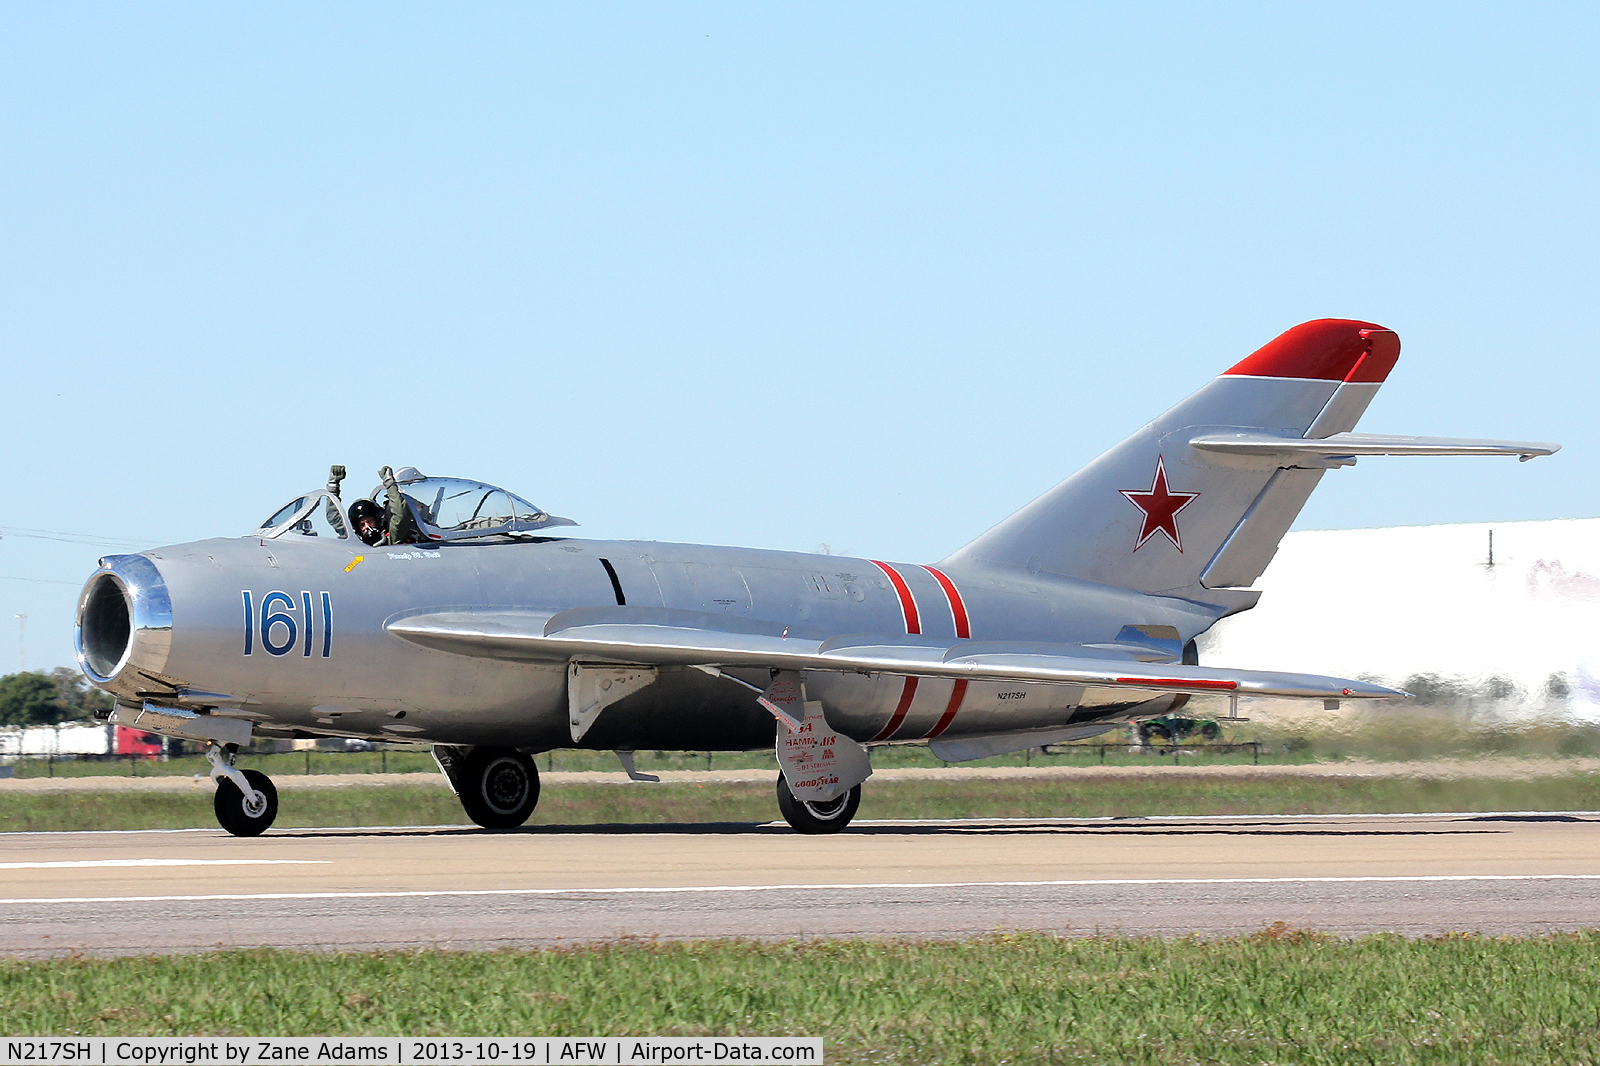 N217SH, 1959 PZL-Mielec Lim-5 (MiG-17F) C/N 1C1611, At the 2013 Alliance Airshow - Fort Worth, TX